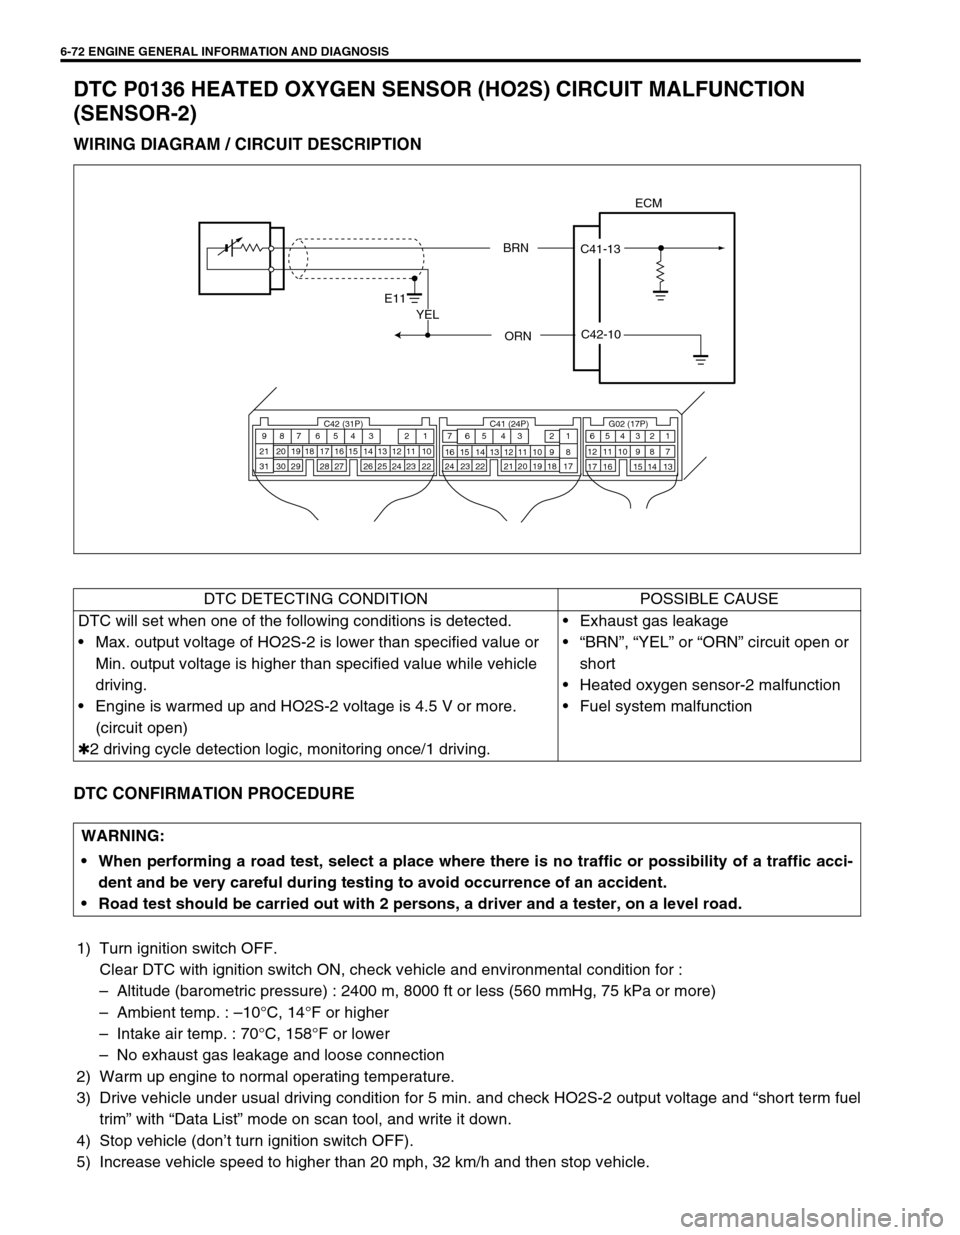 SUZUKI SWIFT 2000 1.G RG413 Service Workshop Manual 6-72 ENGINE GENERAL INFORMATION AND DIAGNOSIS
DTC P0136 HEATED OXYGEN SENSOR (HO2S) CIRCUIT MALFUNCTION 
(SENSOR-2)
WIRING DIAGRAM / CIRCUIT DESCRIPTION
DTC CONFIRMATION PROCEDURE
1) Turn ignition swi